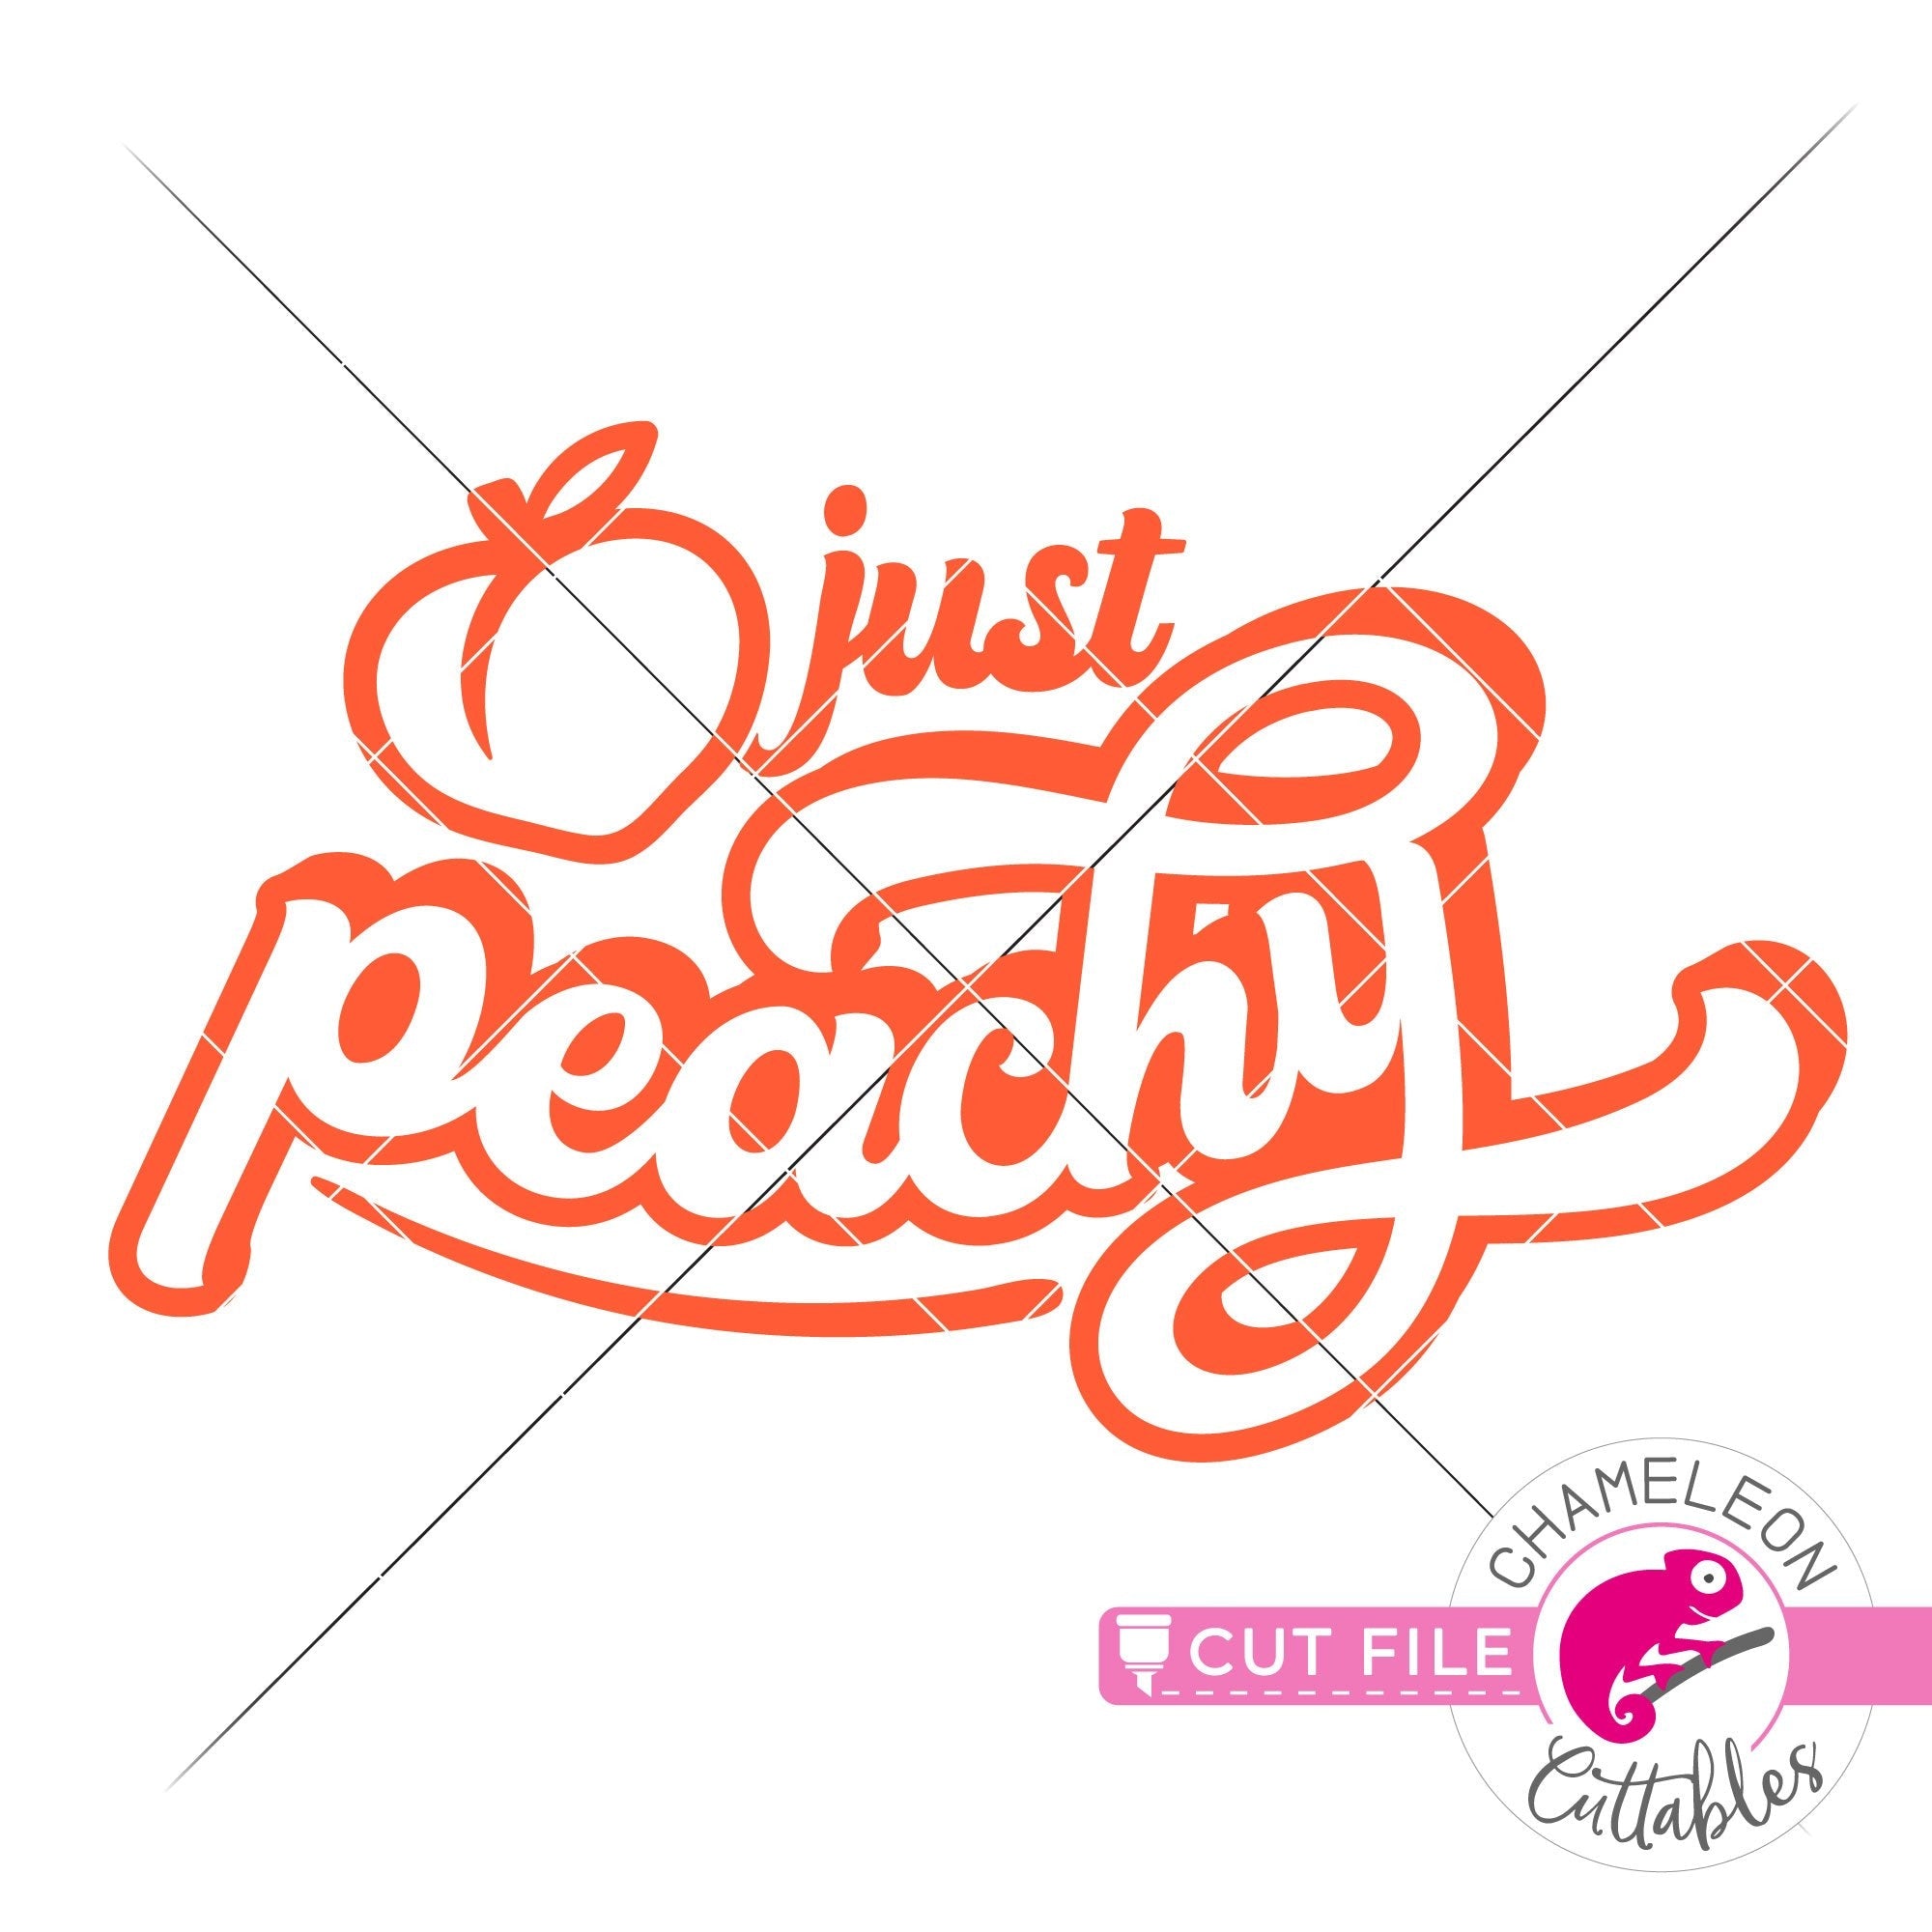 File:Peaches logo.svg - Wikimedia Commons